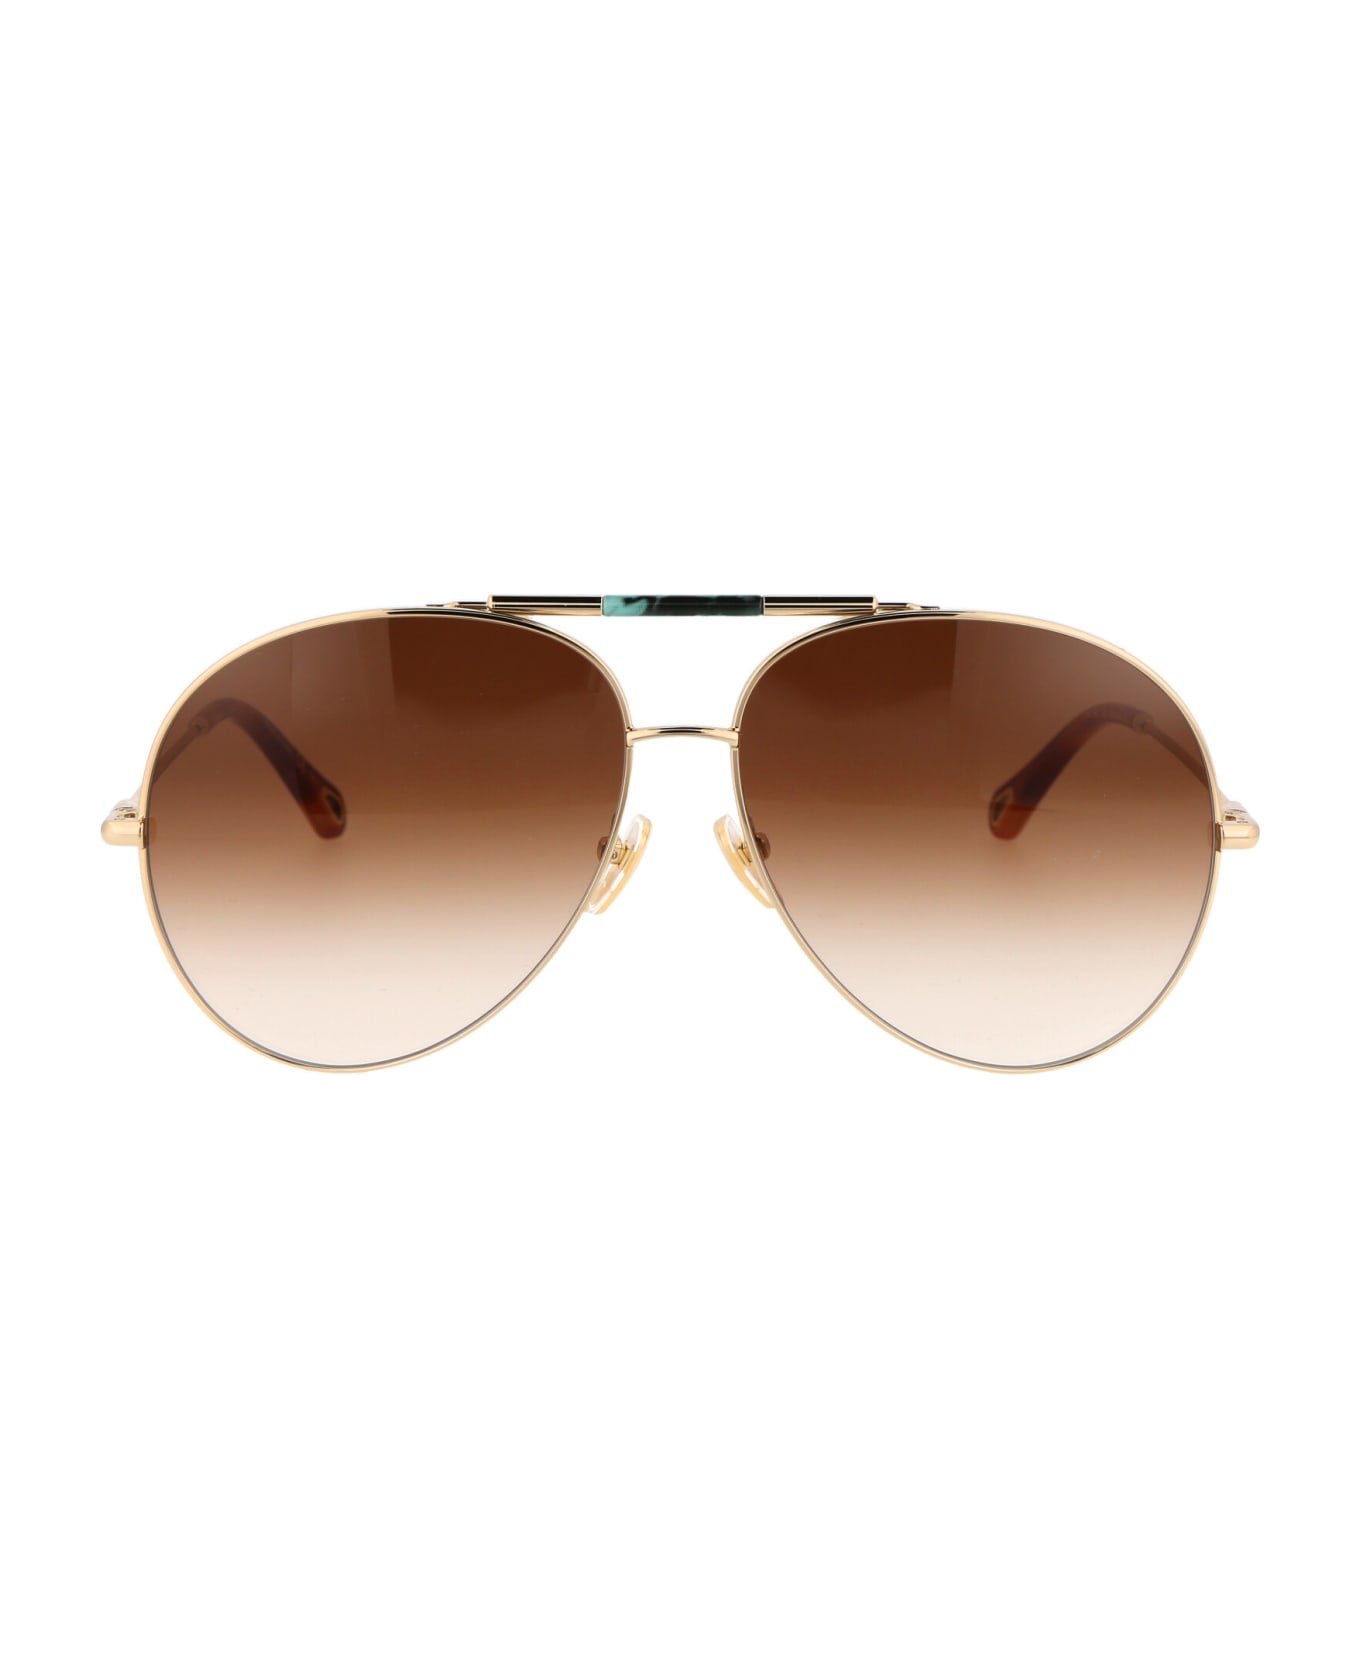 Chloé Eyewear Ch0113s Sunglasses - 002 GOLD GOLD BROWN サングラス